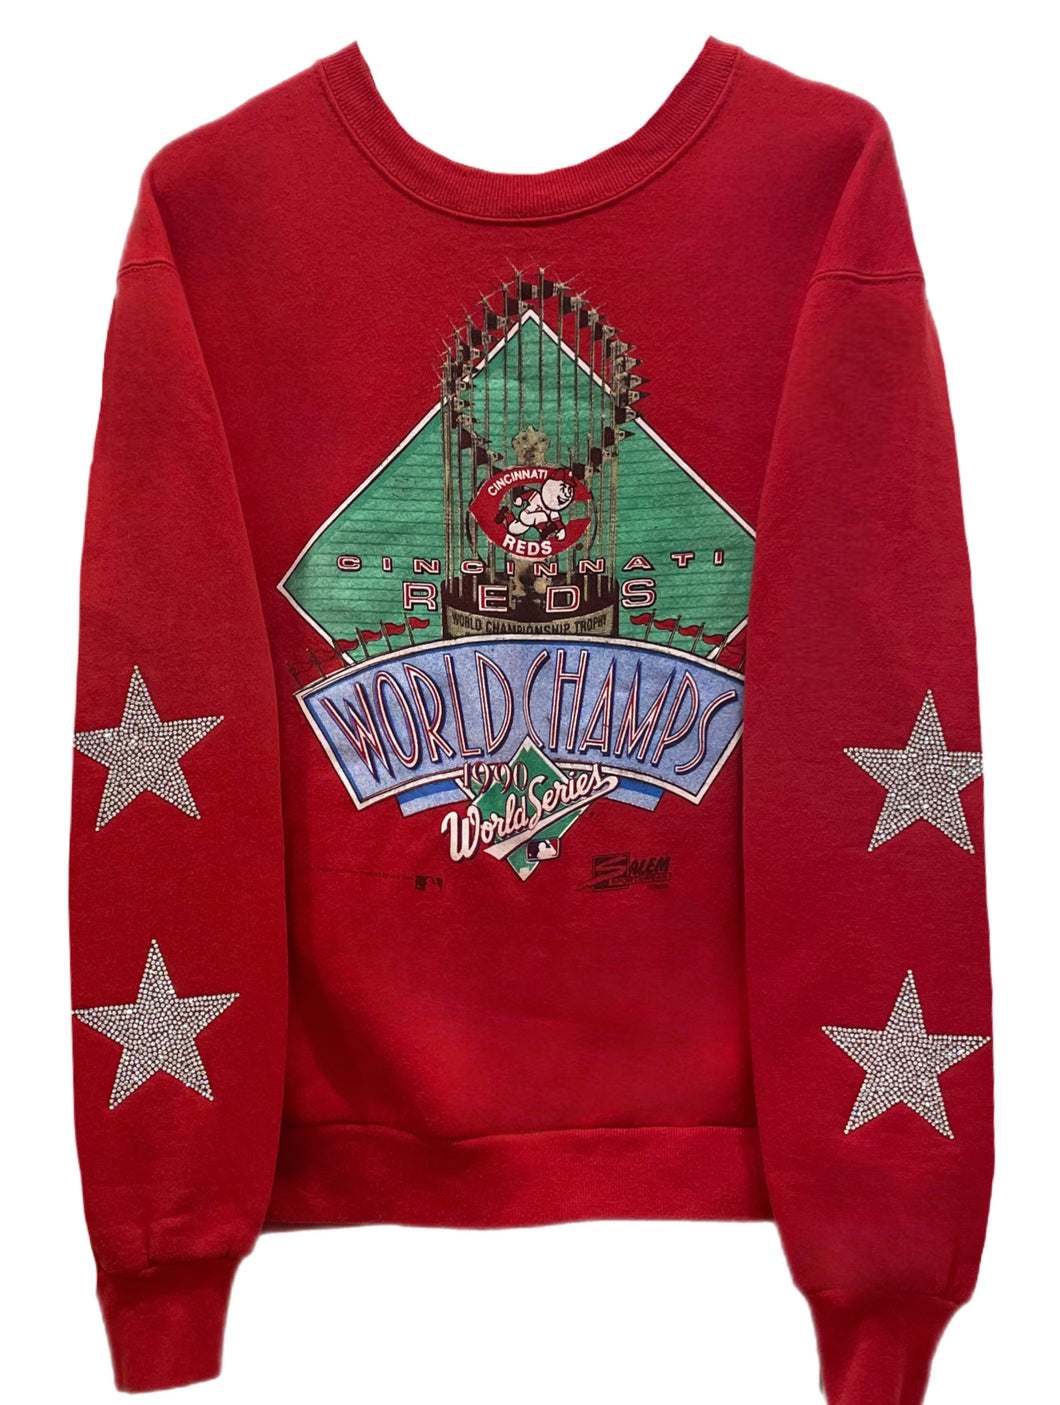 ShopCrystalRags Cincinnati Reds, MLB One of A Kind Vintage Sweatshirt with Crystal Star Design.